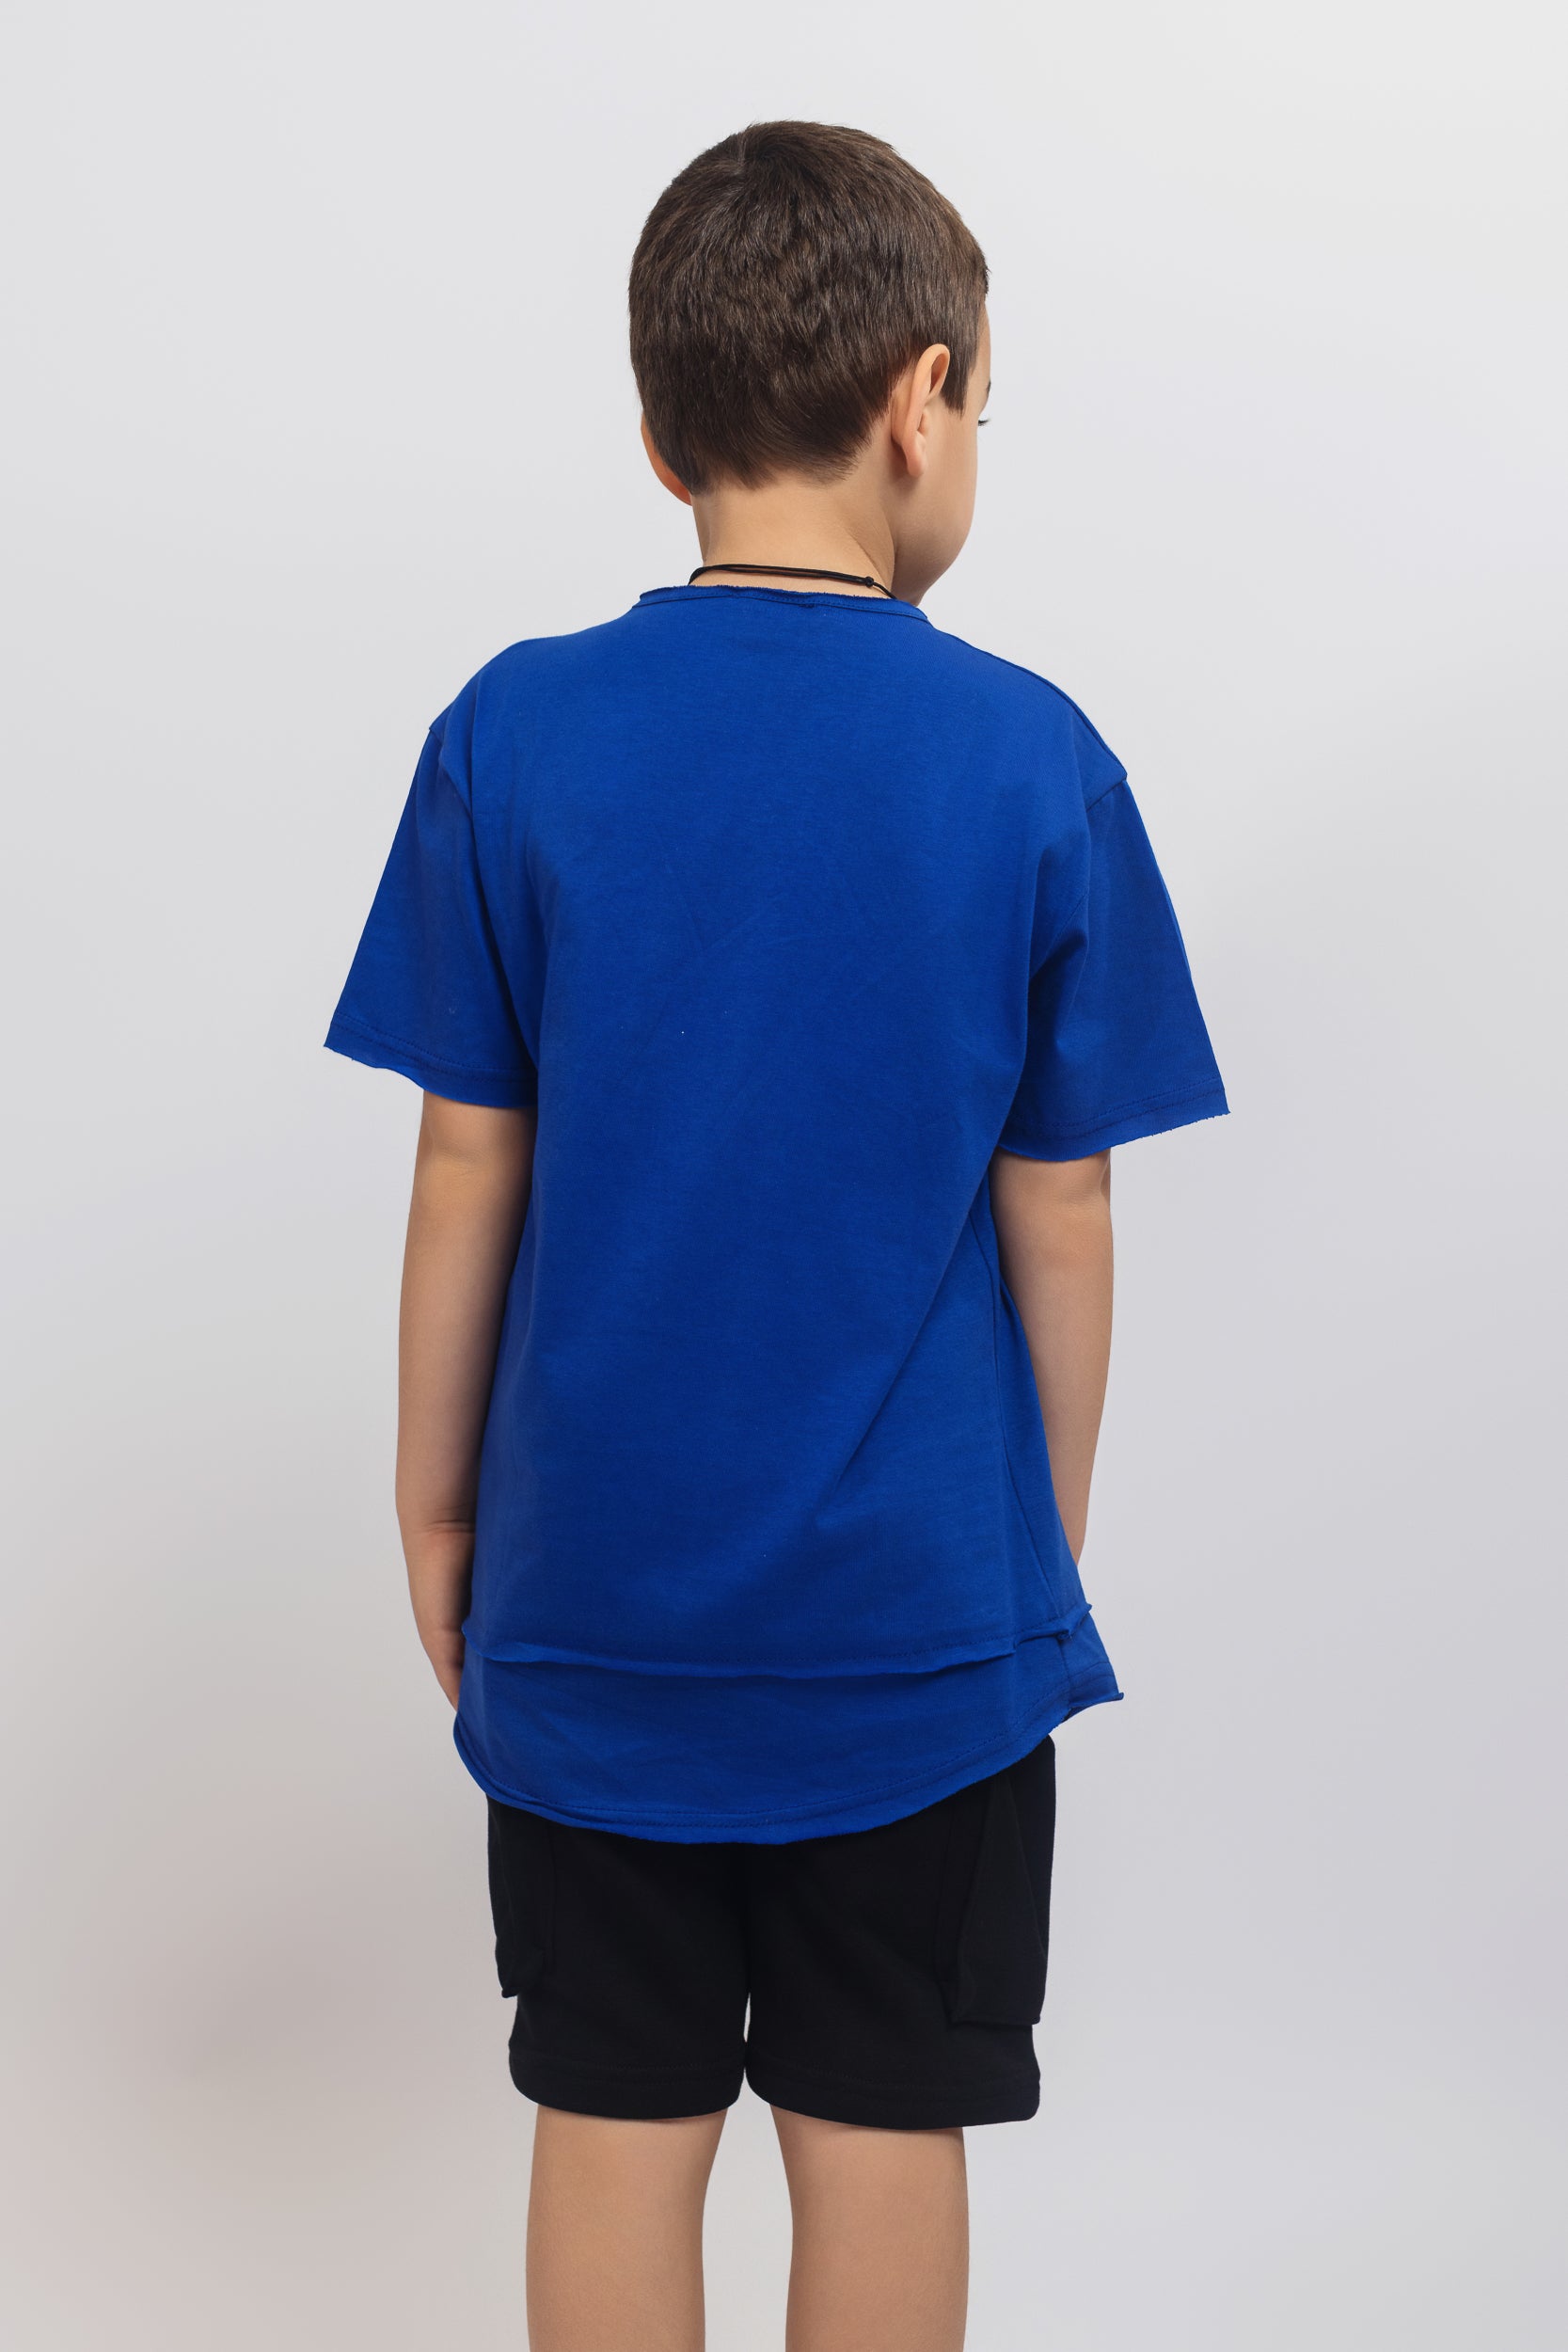 Fish T-shirt For Boys - Bleu Gitane